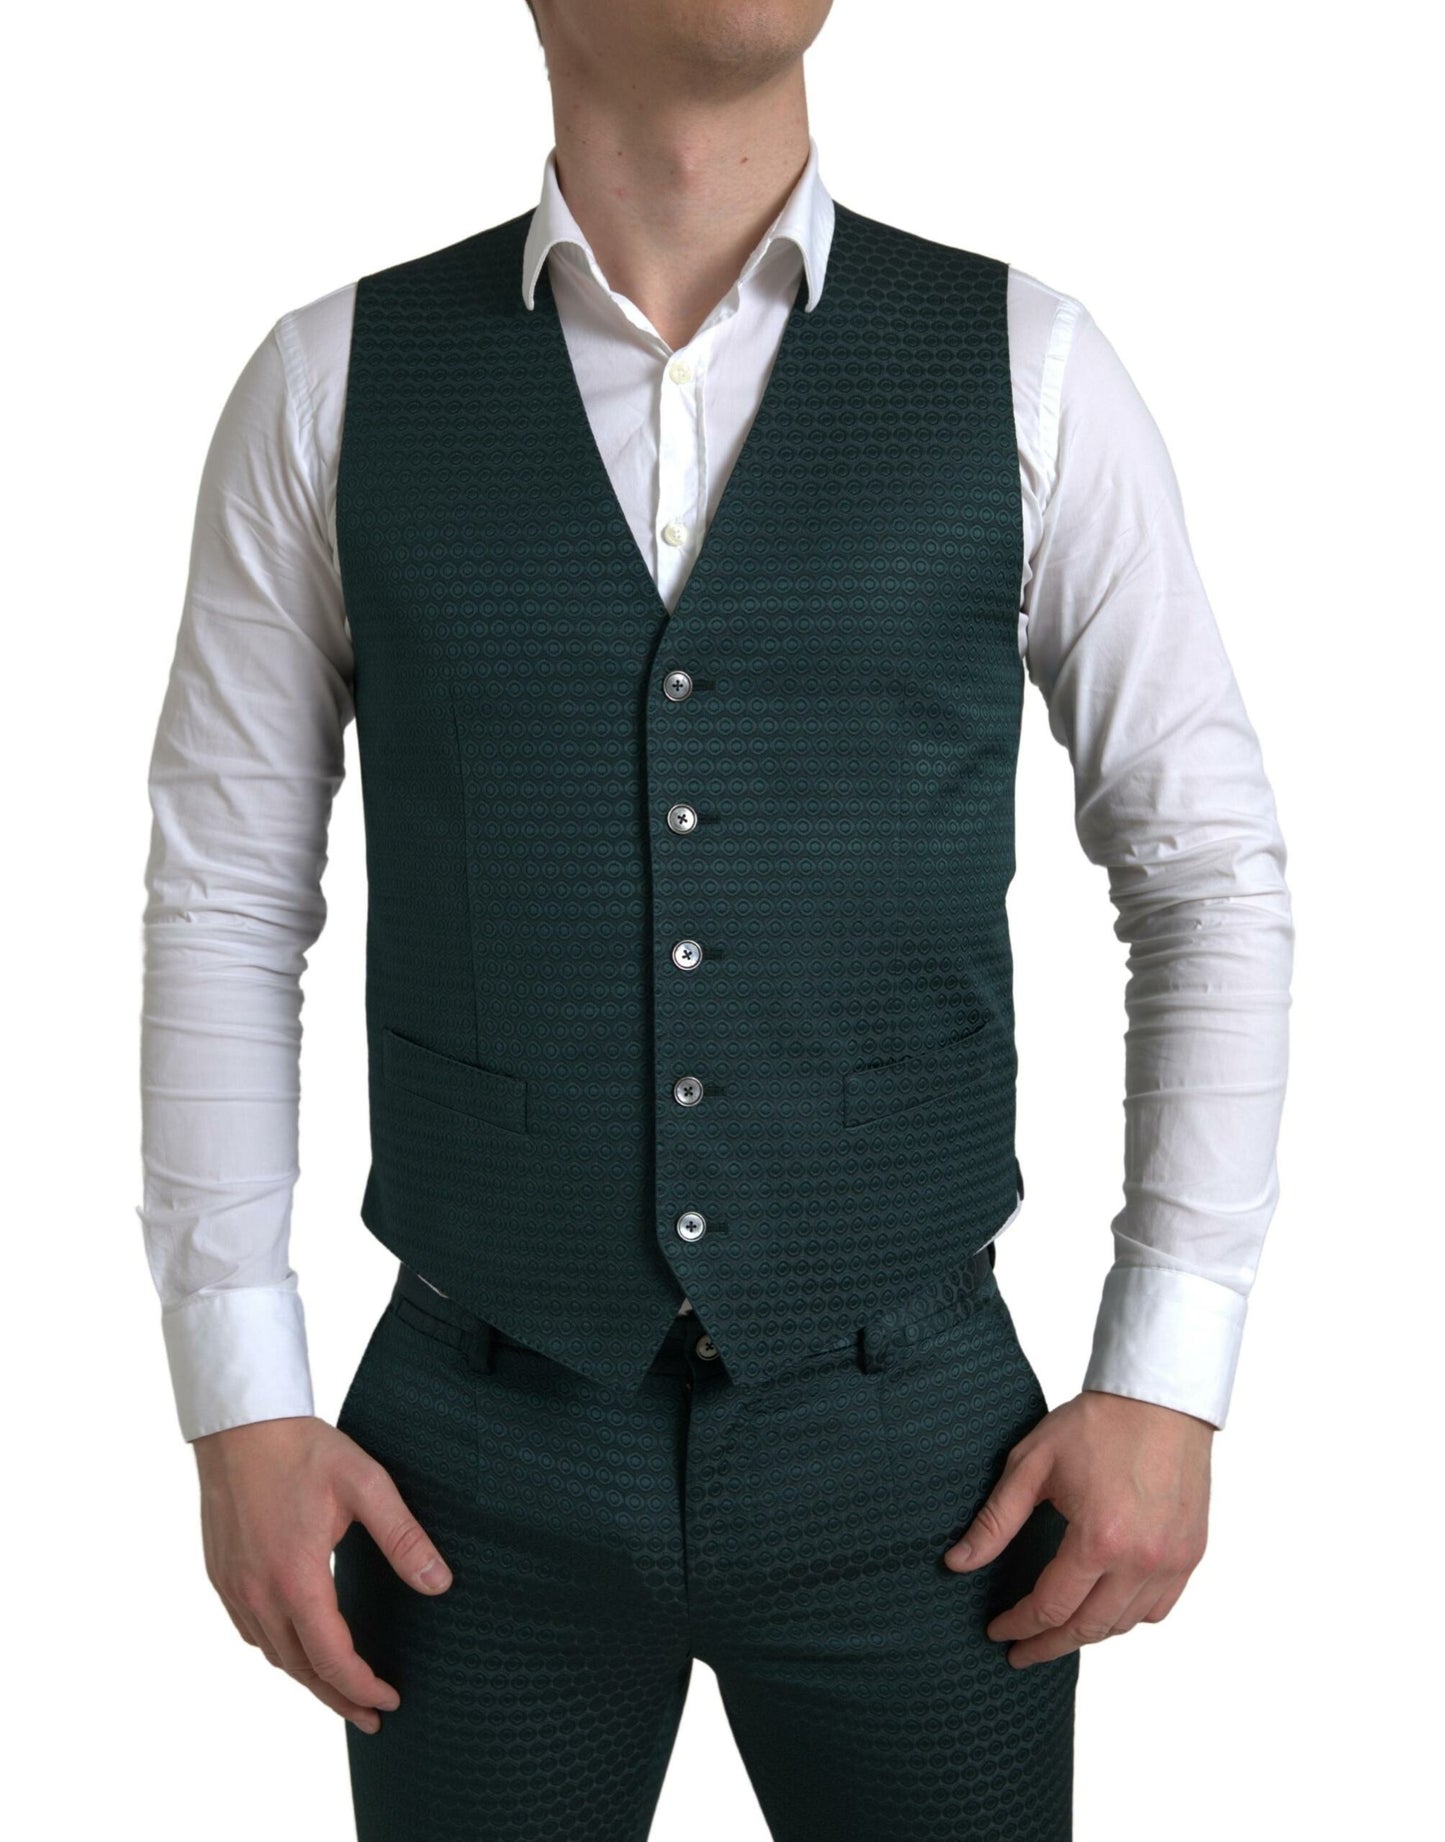 Emerald Elegance Slim Fit 3-Piece Suit